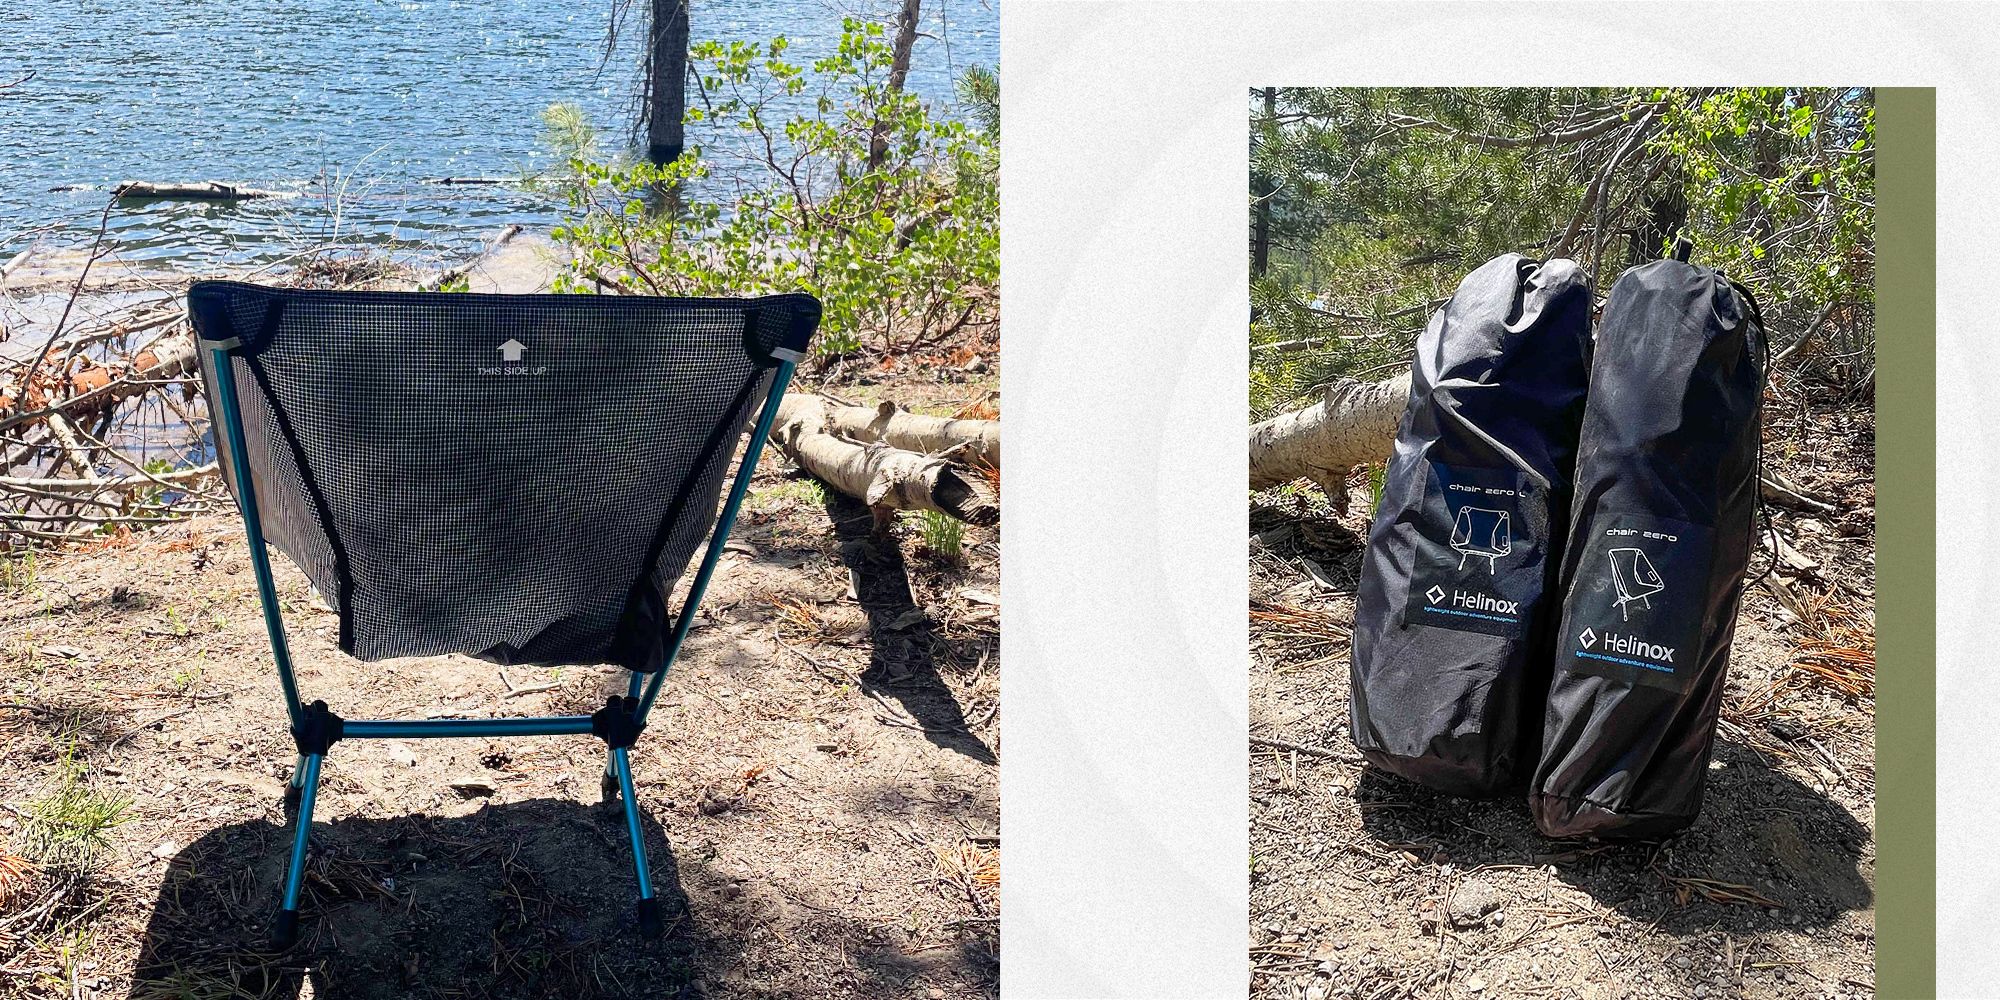 Cheap Portable Outdoor Tool Aluminium Alloy Picnic Camping Camping Stool  Pocket Seat Fishing Chair